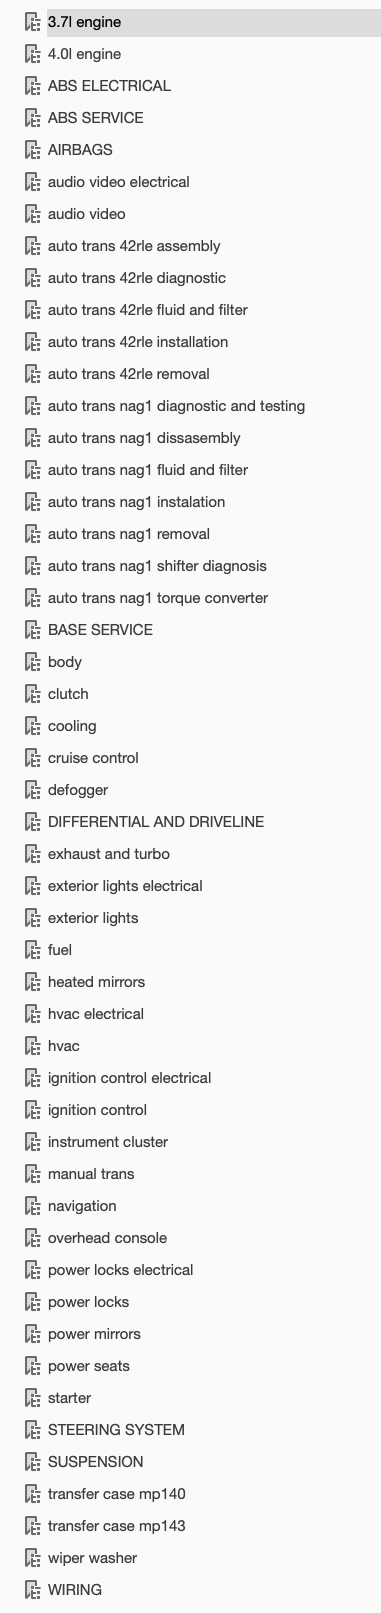 Table of Contents 2007 Dodge Nitro R/T Repair Manual